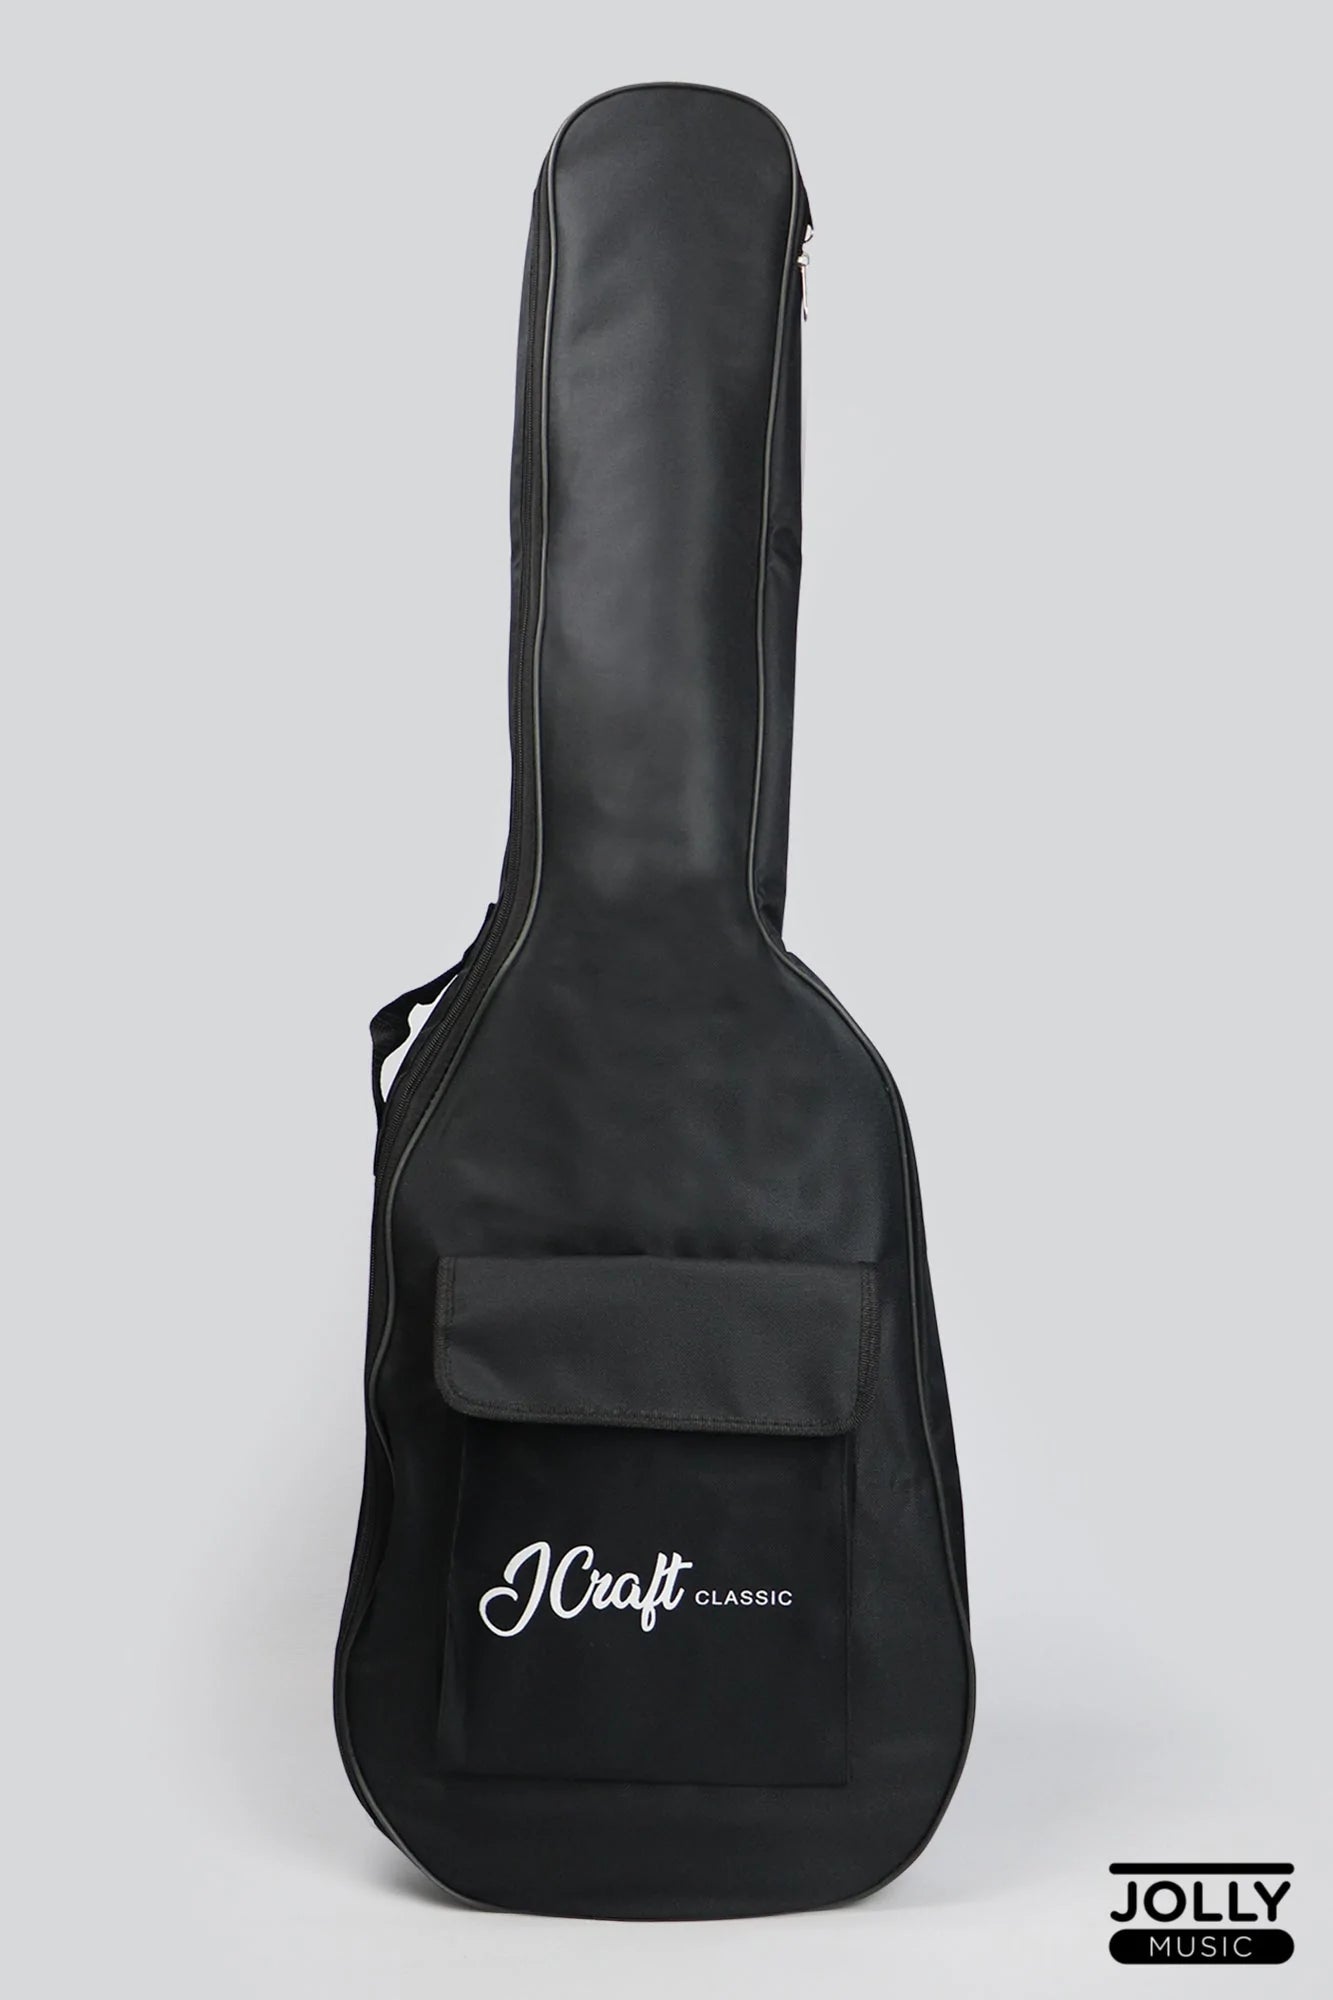 JCraft PB-1 4-String Electric Bass Guitar with Gigbag - Avocado